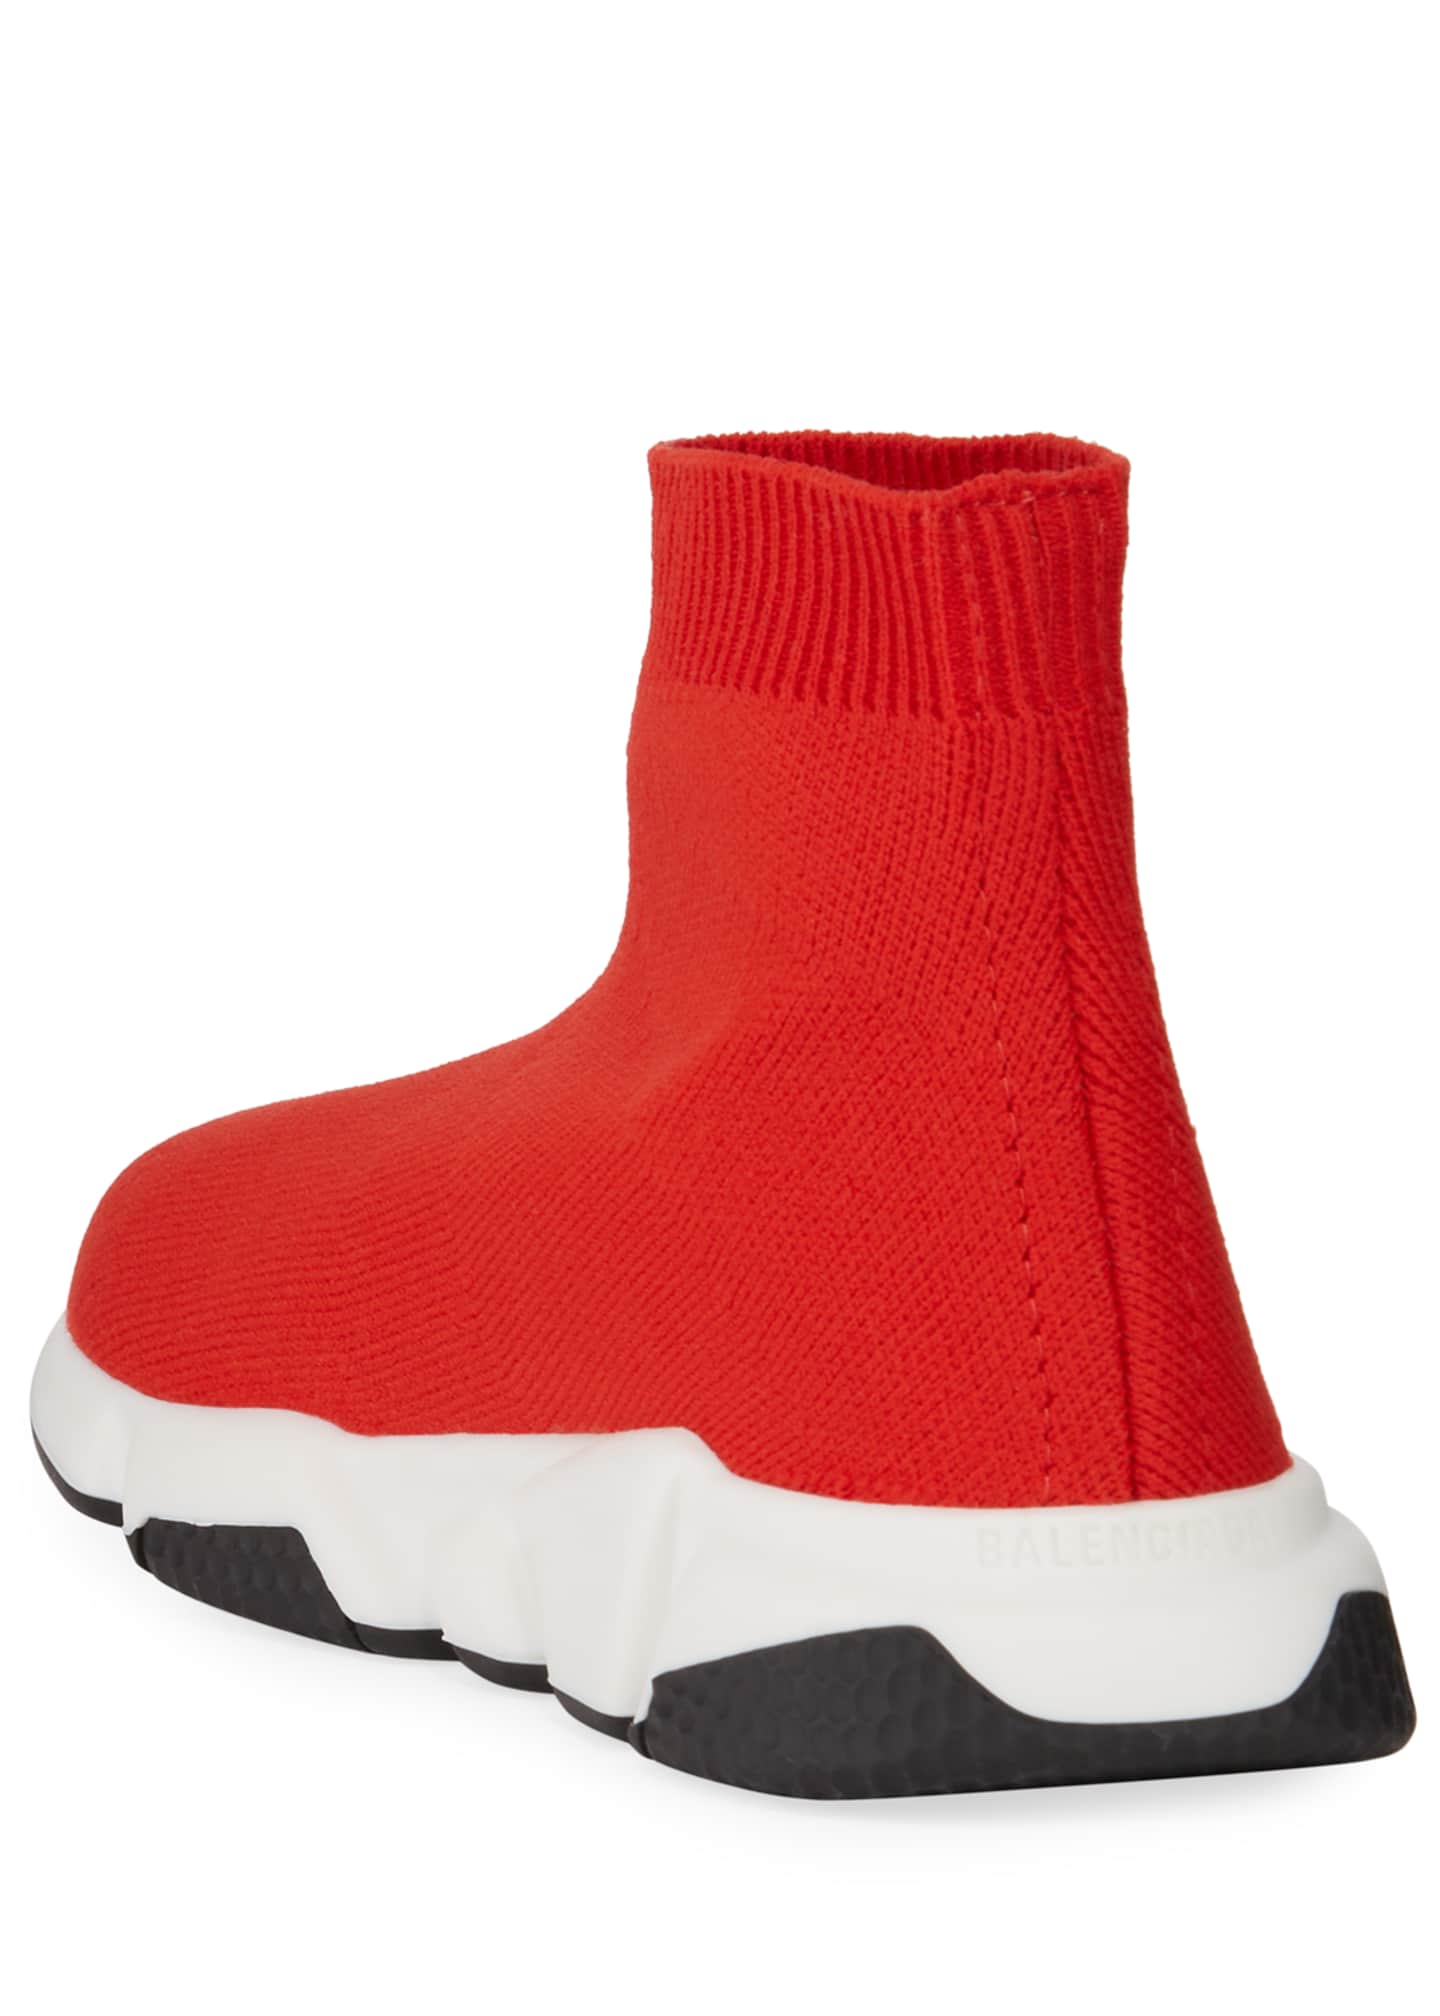  www bergdorfgoodman com p balenciaga speed sock sneakers toddler kids red white prod152810077 ecid BGCS BingPLA scid scbplpsku120600483 sc intid sku120600483